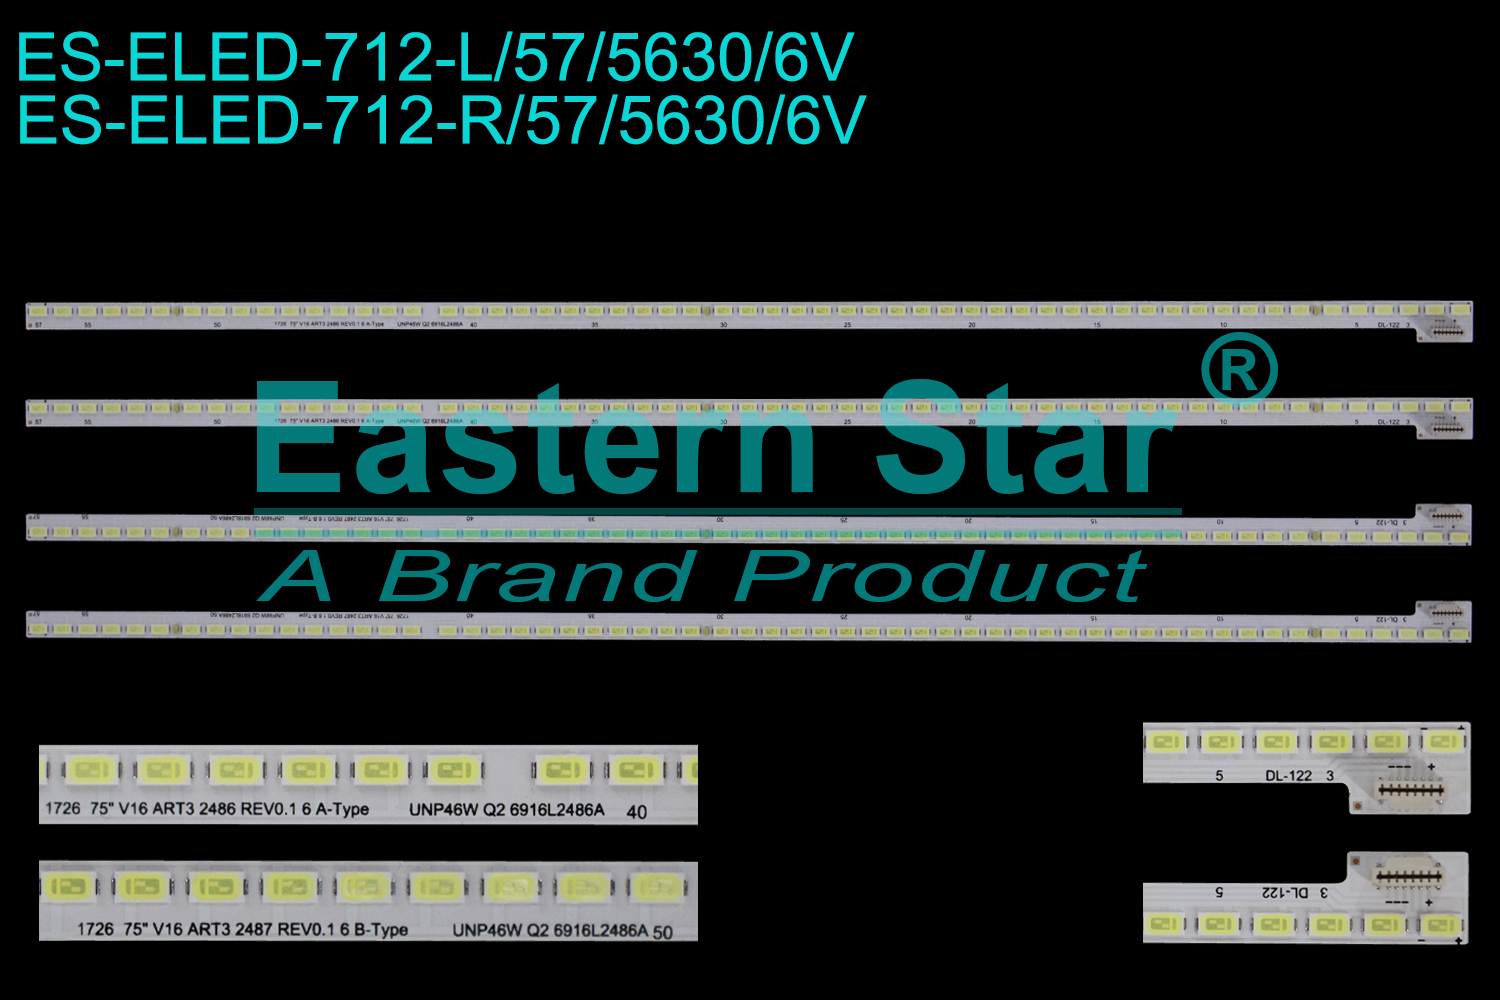 ES-ELED-712 ELED/EDGE TV backlight use for 75'' Lg 75SJ8570-UB L: 1726 75" V16 ART3 2486 REV0.1 6 A-Type UNP46W Q2 6916L2486A    R: 1726 75" V16 ART3 2487 REV0.1 6 B-Type UNP46W Q2 6916L2487A  LED STRIPS(4)